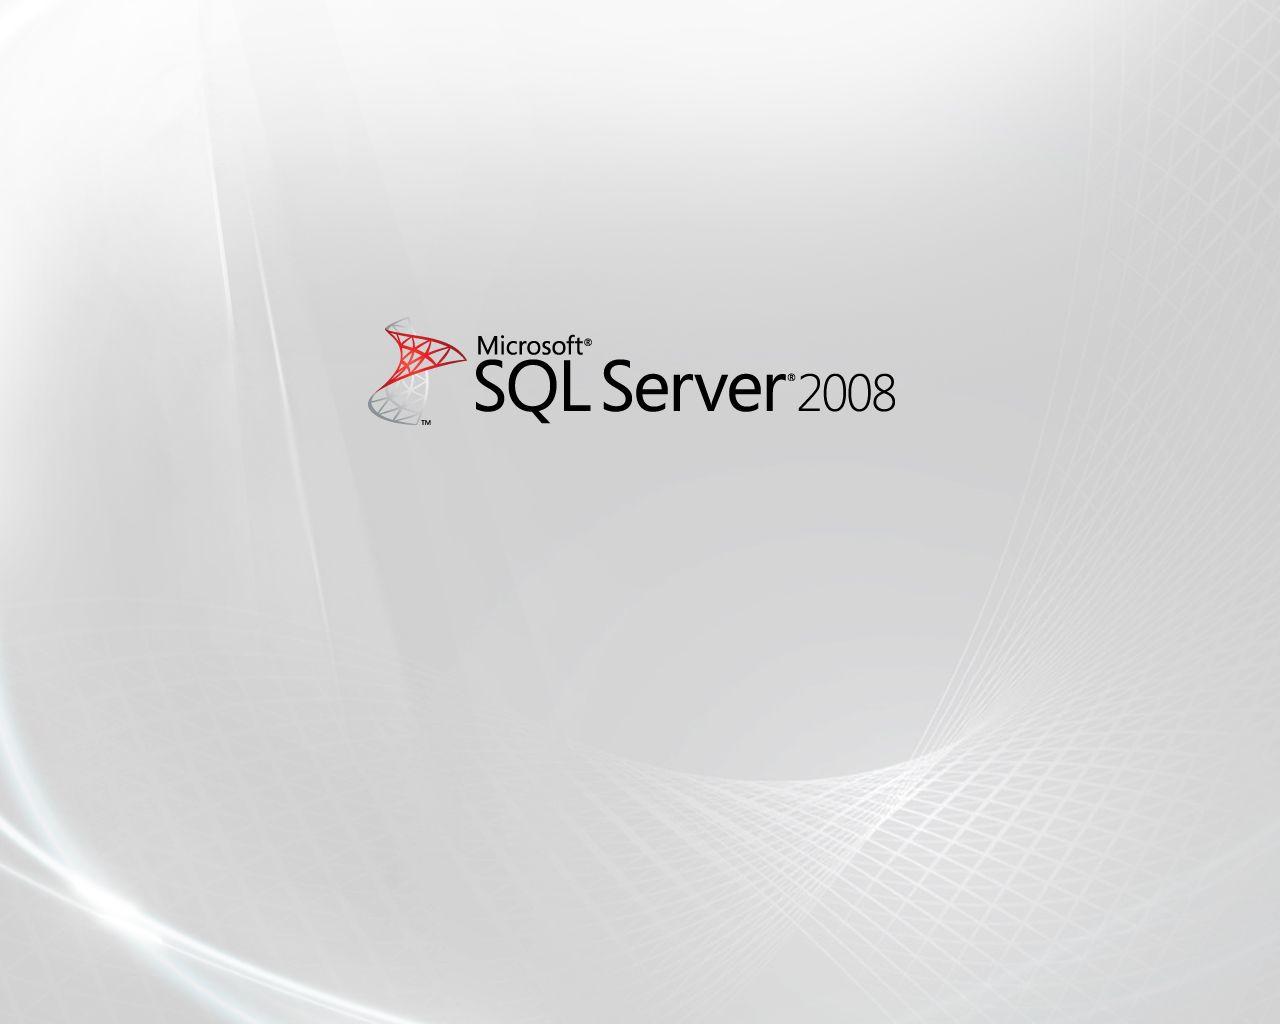 Official SQL Server 2008 wallpaper and screensaver